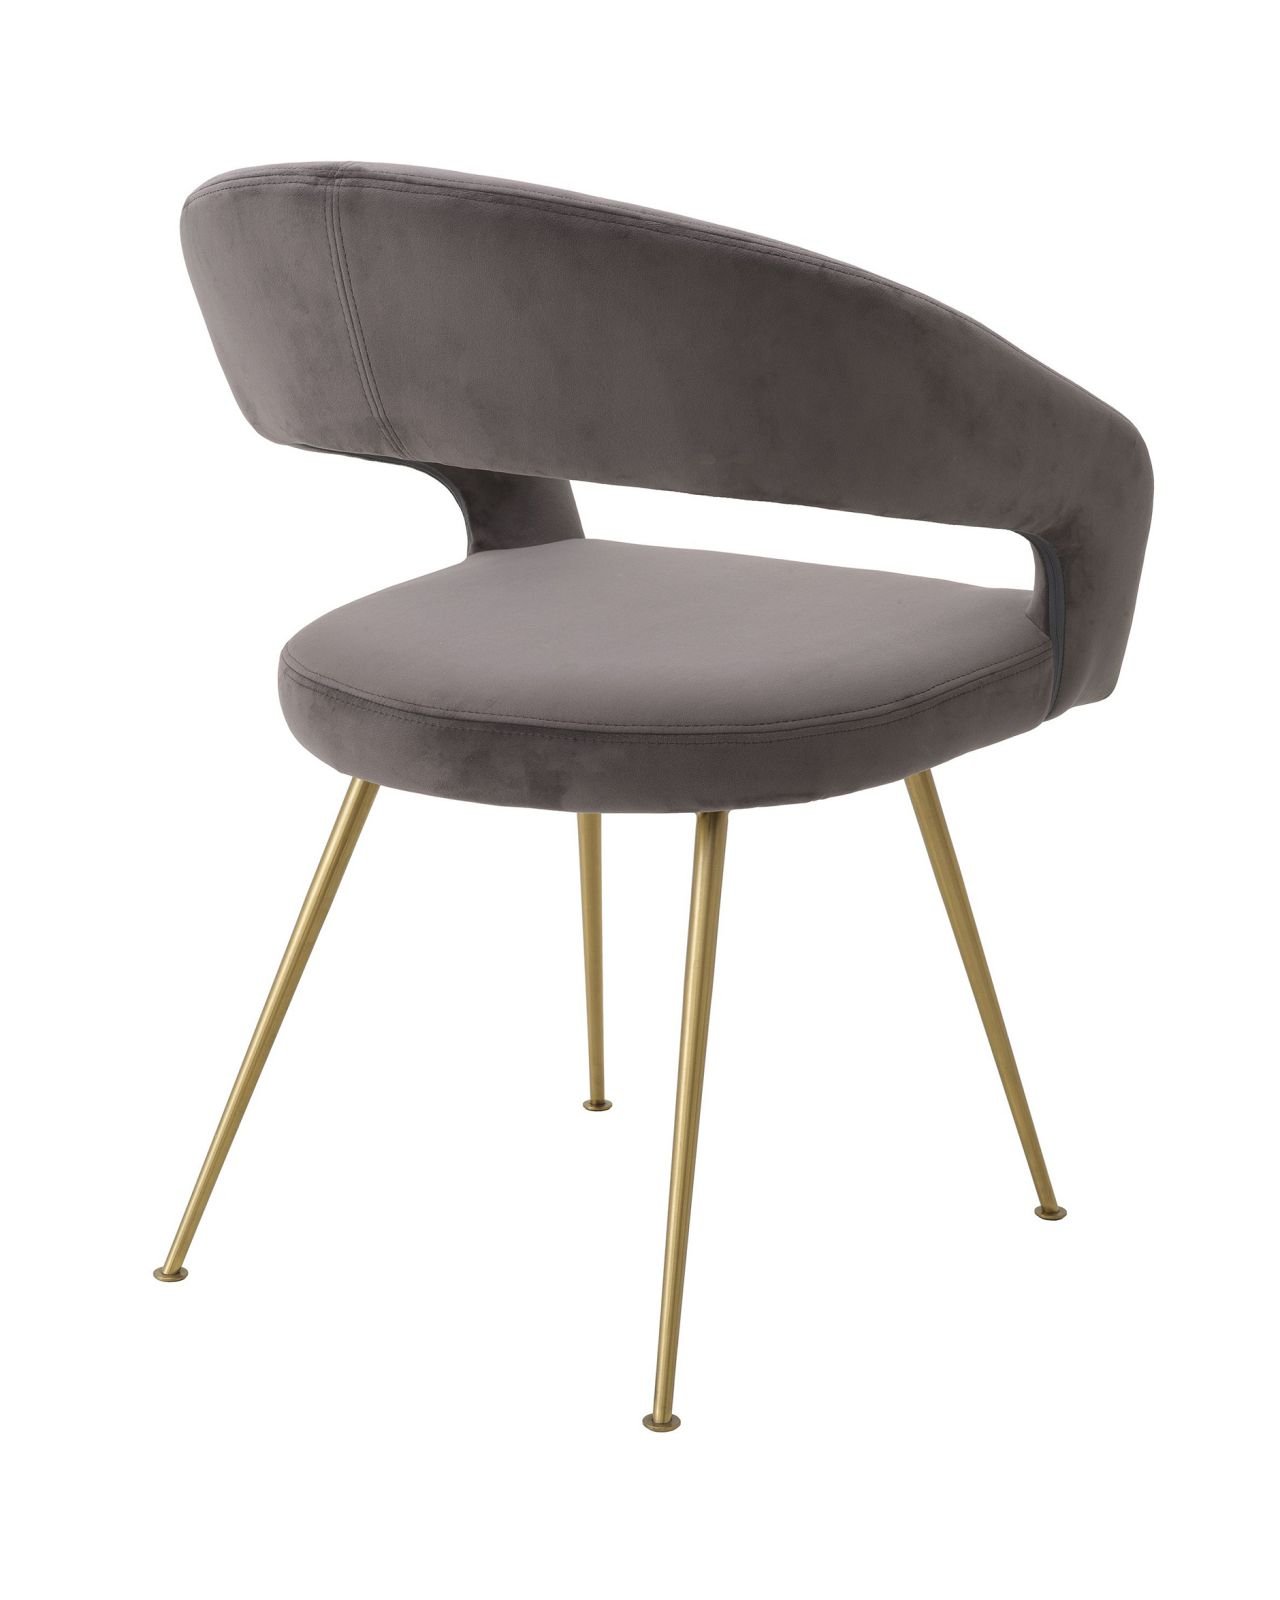 Bravo dining chair velvet savona grey